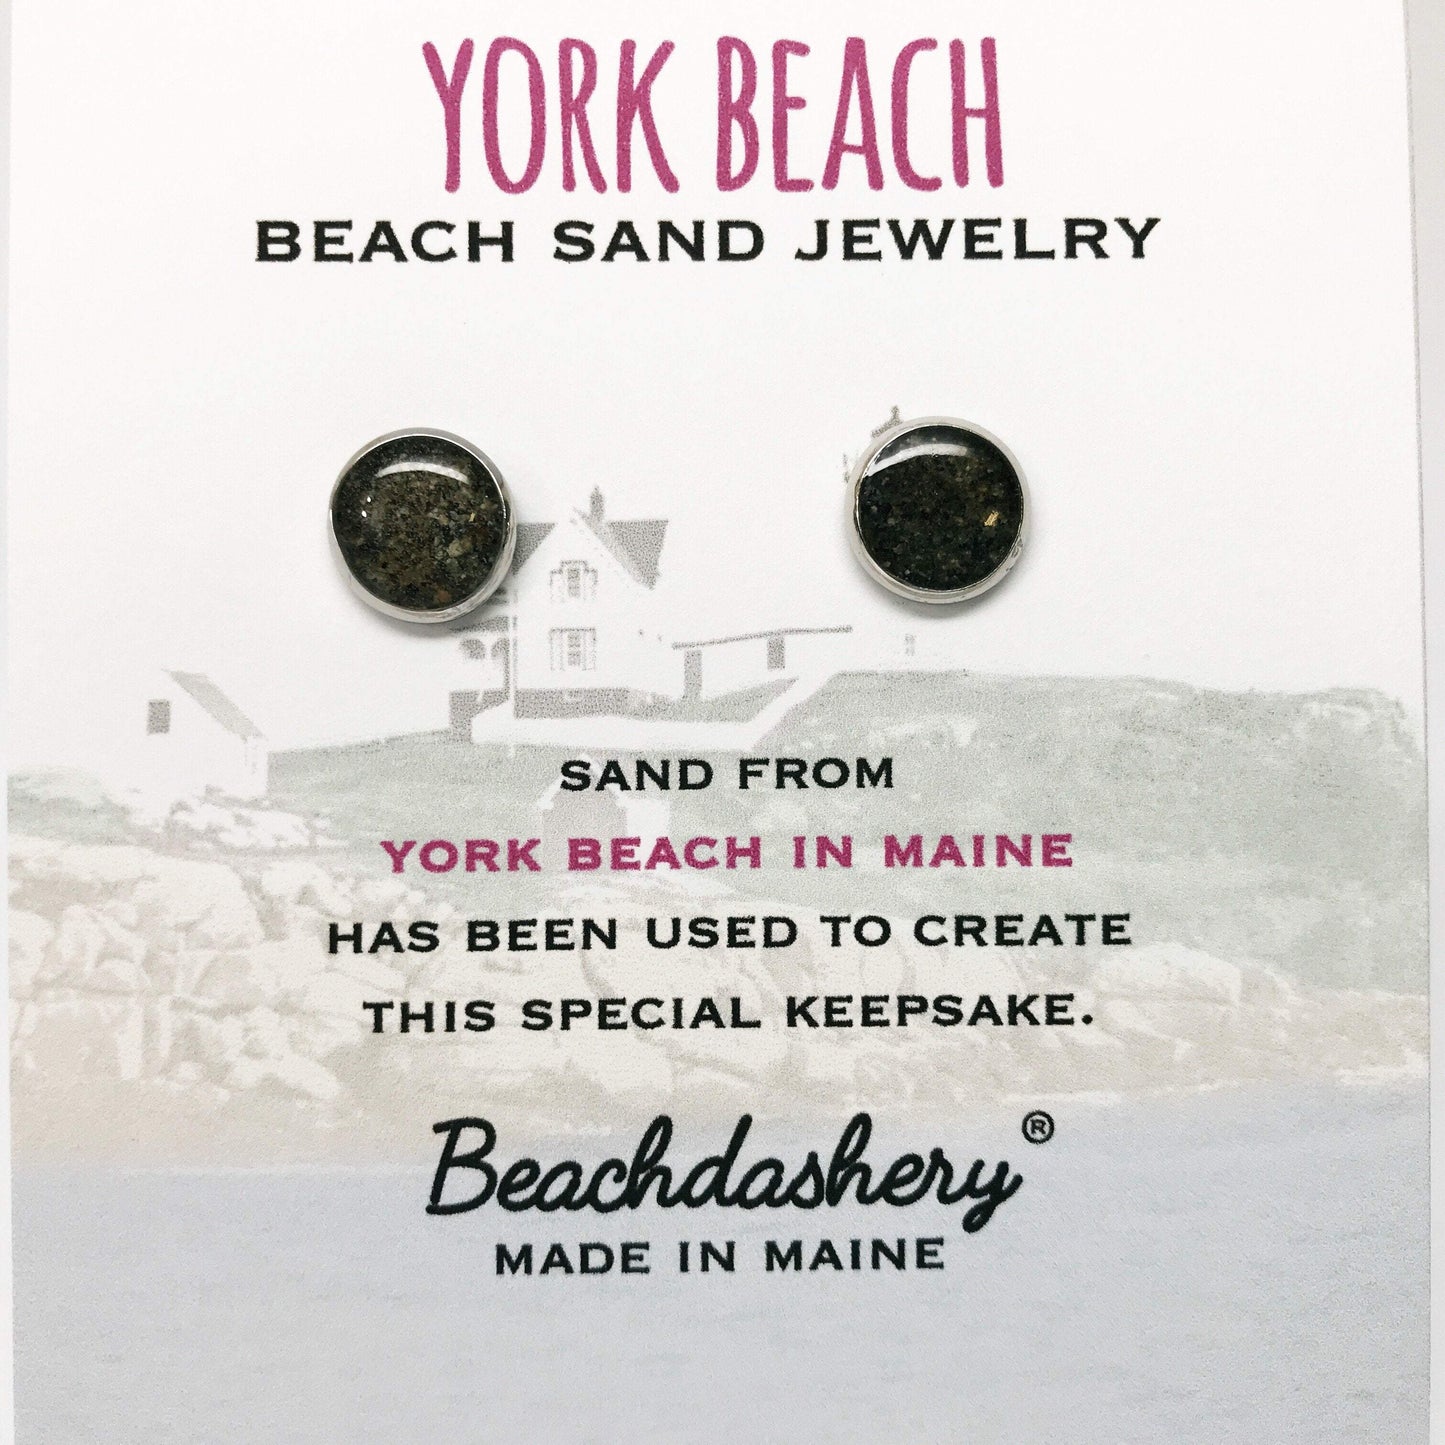 Load image into Gallery viewer, York Beach Maine Sand Jewelry Beachdashery® Jewelry
